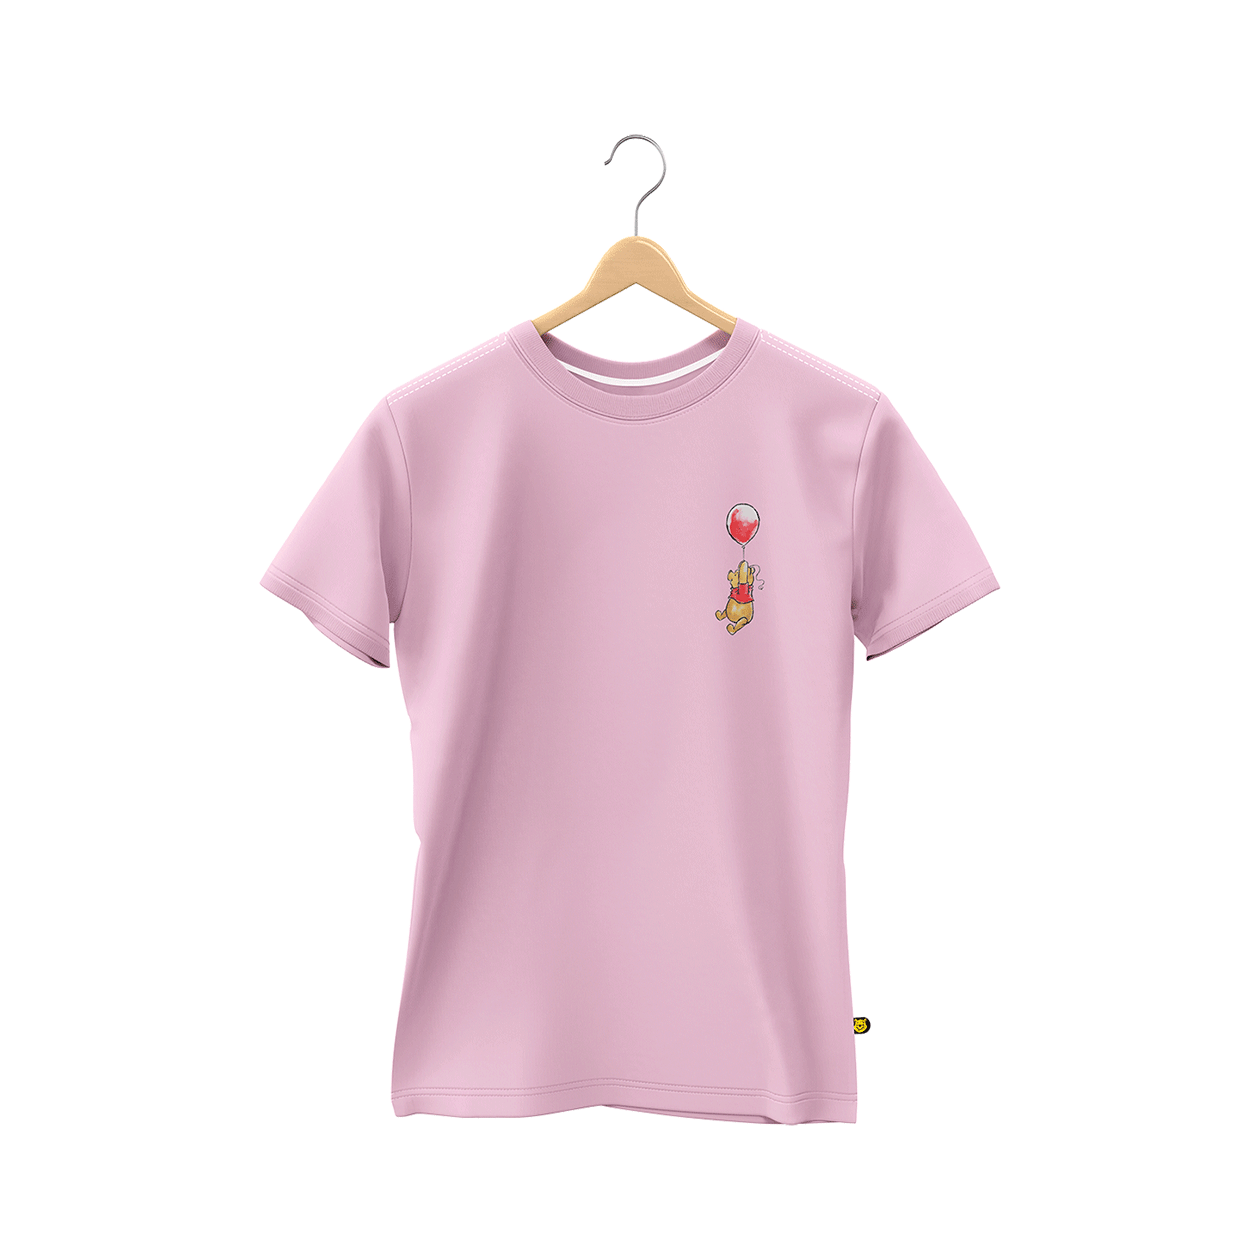 Winnie The Pooh Ladies Graphic T-Shirt I COMMON SENSE